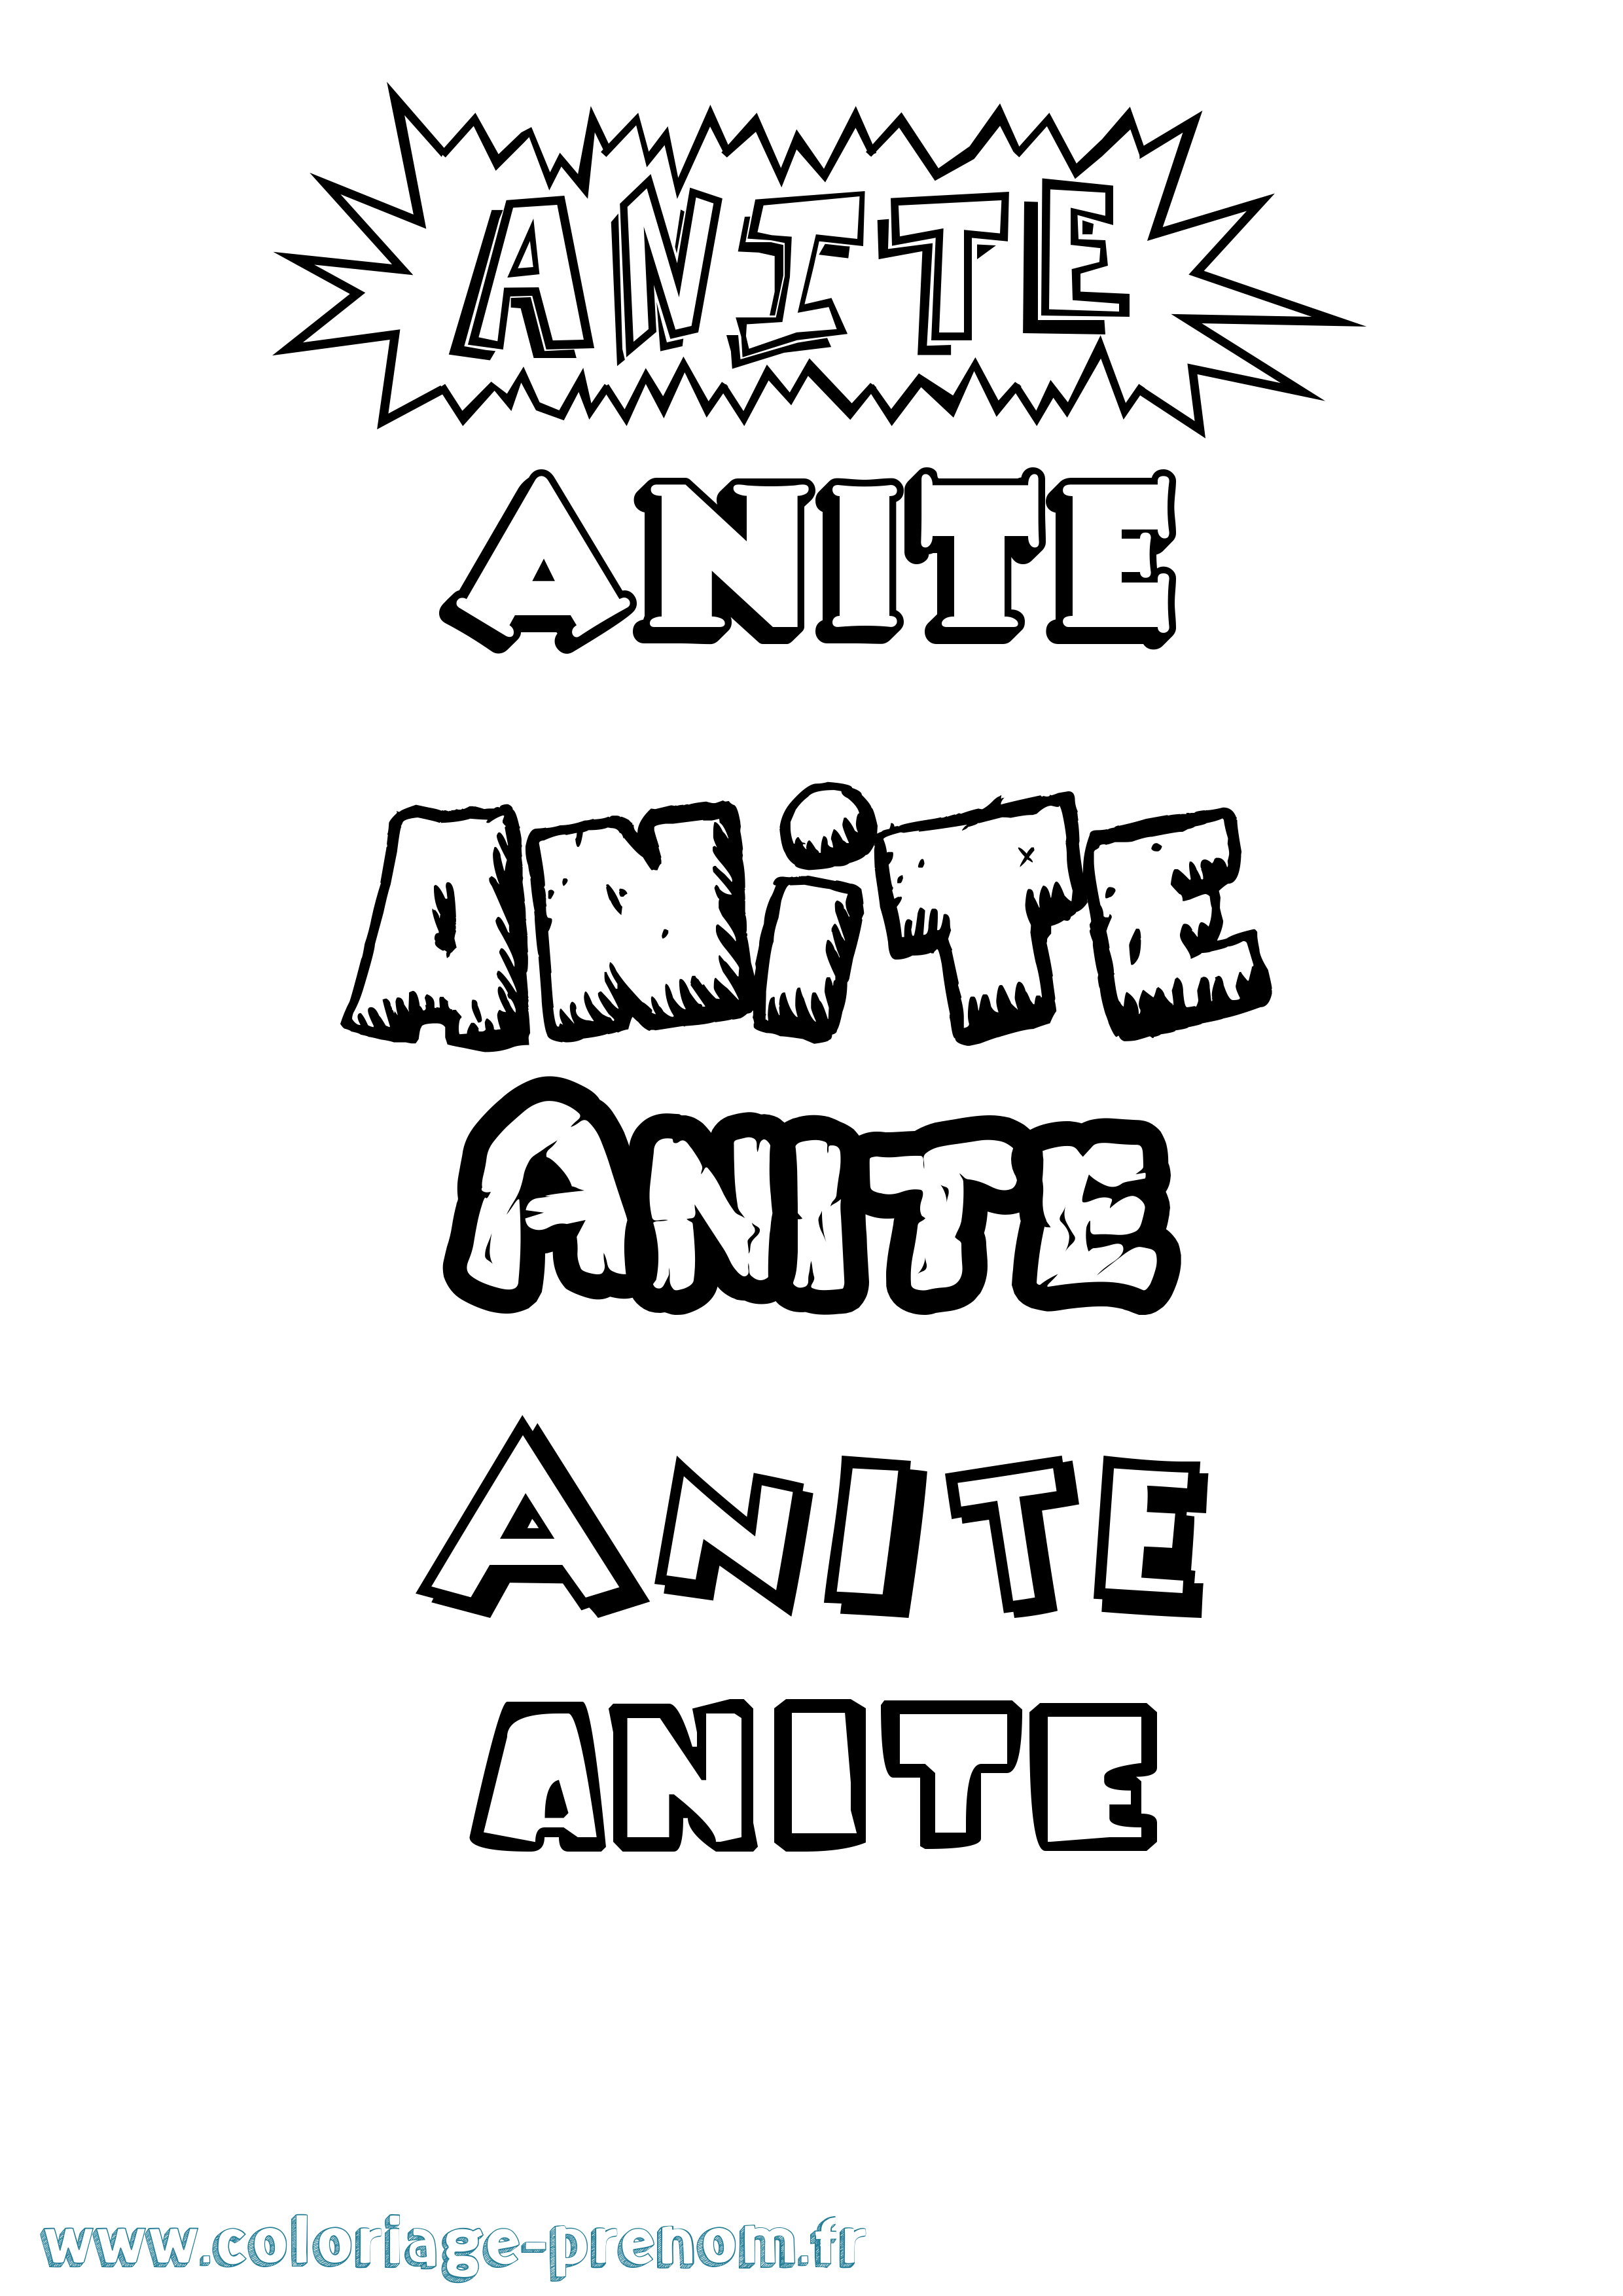 Coloriage prénom Anite Dessin Animé